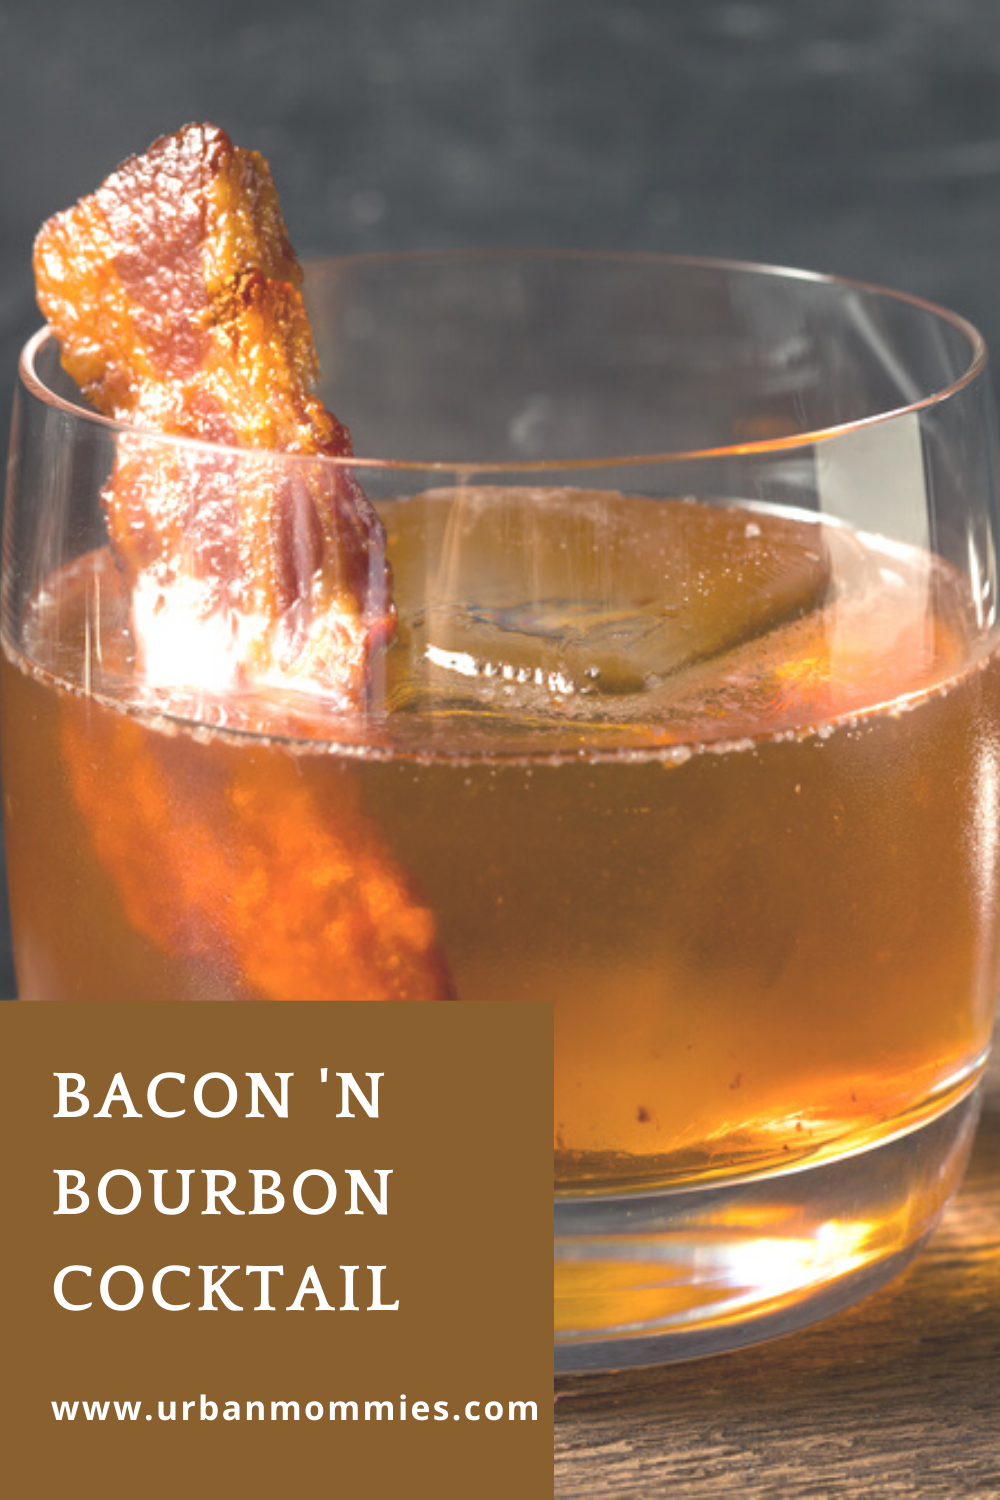 Bacon 'n bourbon cocktail